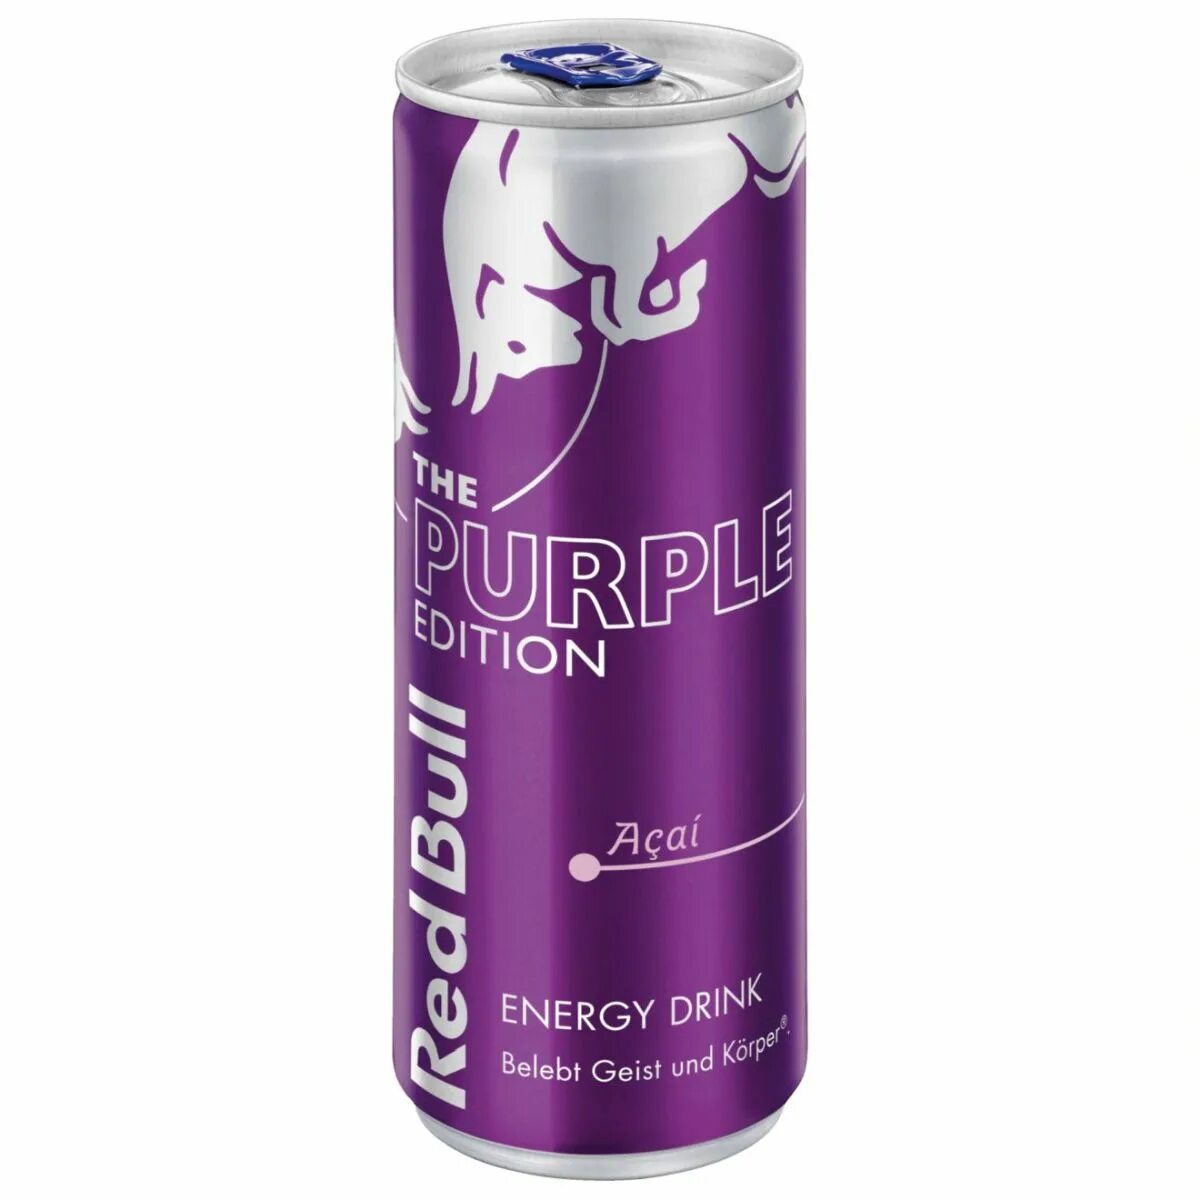 Редбул цена. Энерг. Напиток ред Булл. Red bull Purple Edition. Энергетический напиток Red bull 250 мл. Ред Булл Энергетик вкусы.